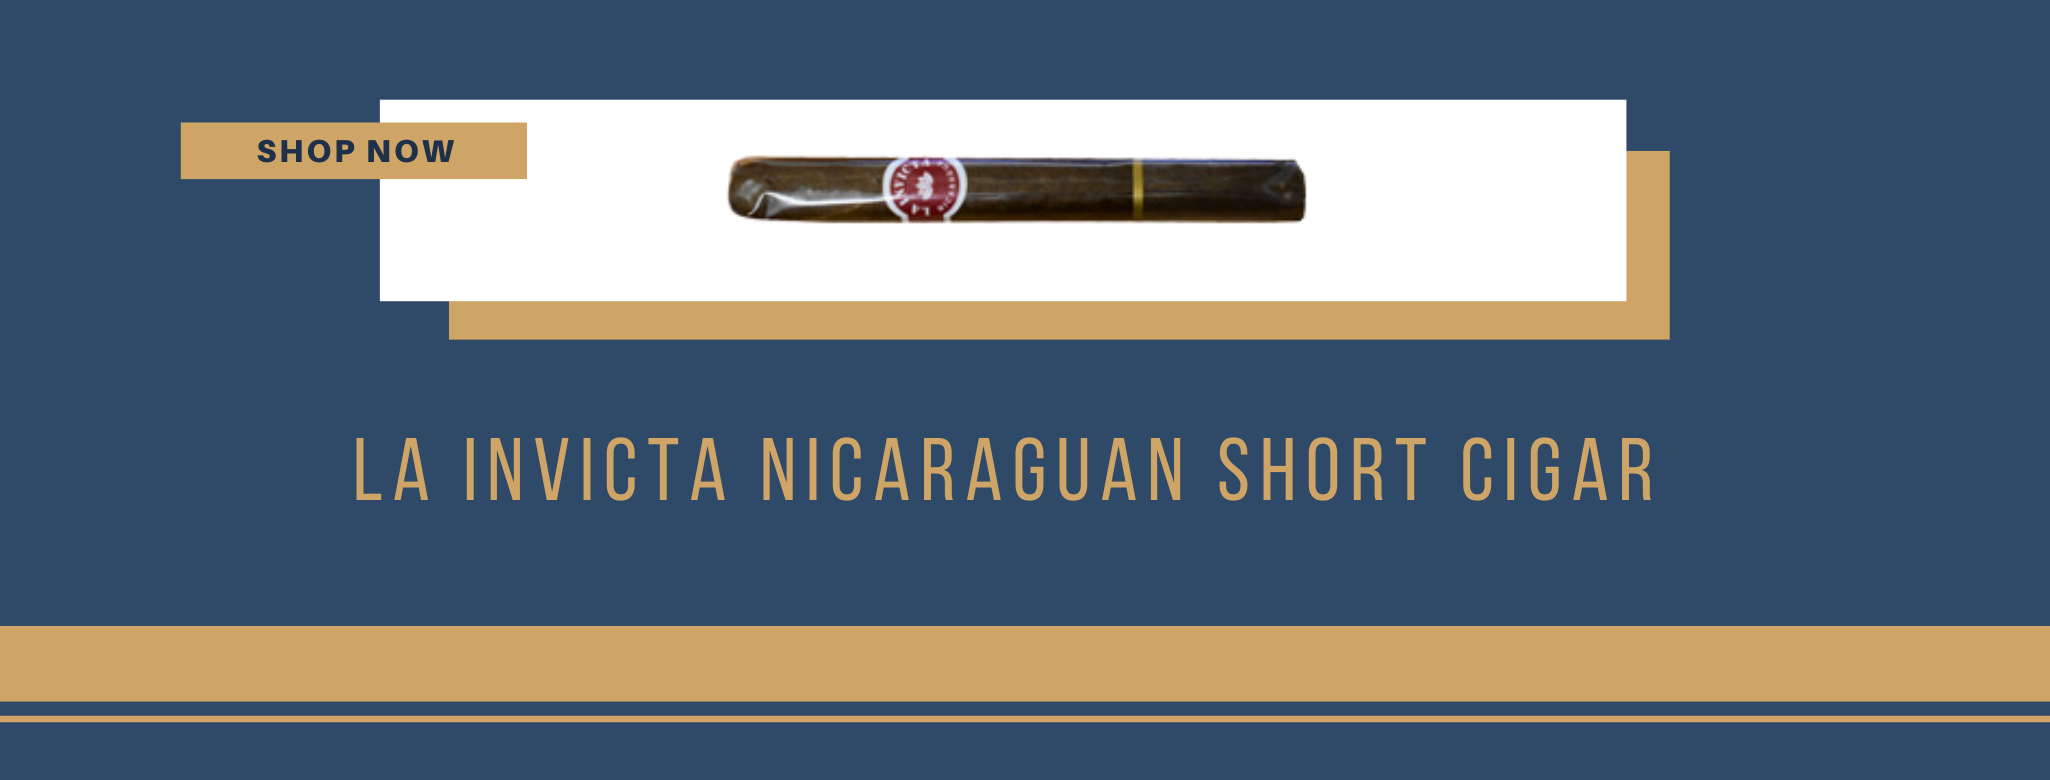 Buy La Invicta Nicaraguan Short cigars online